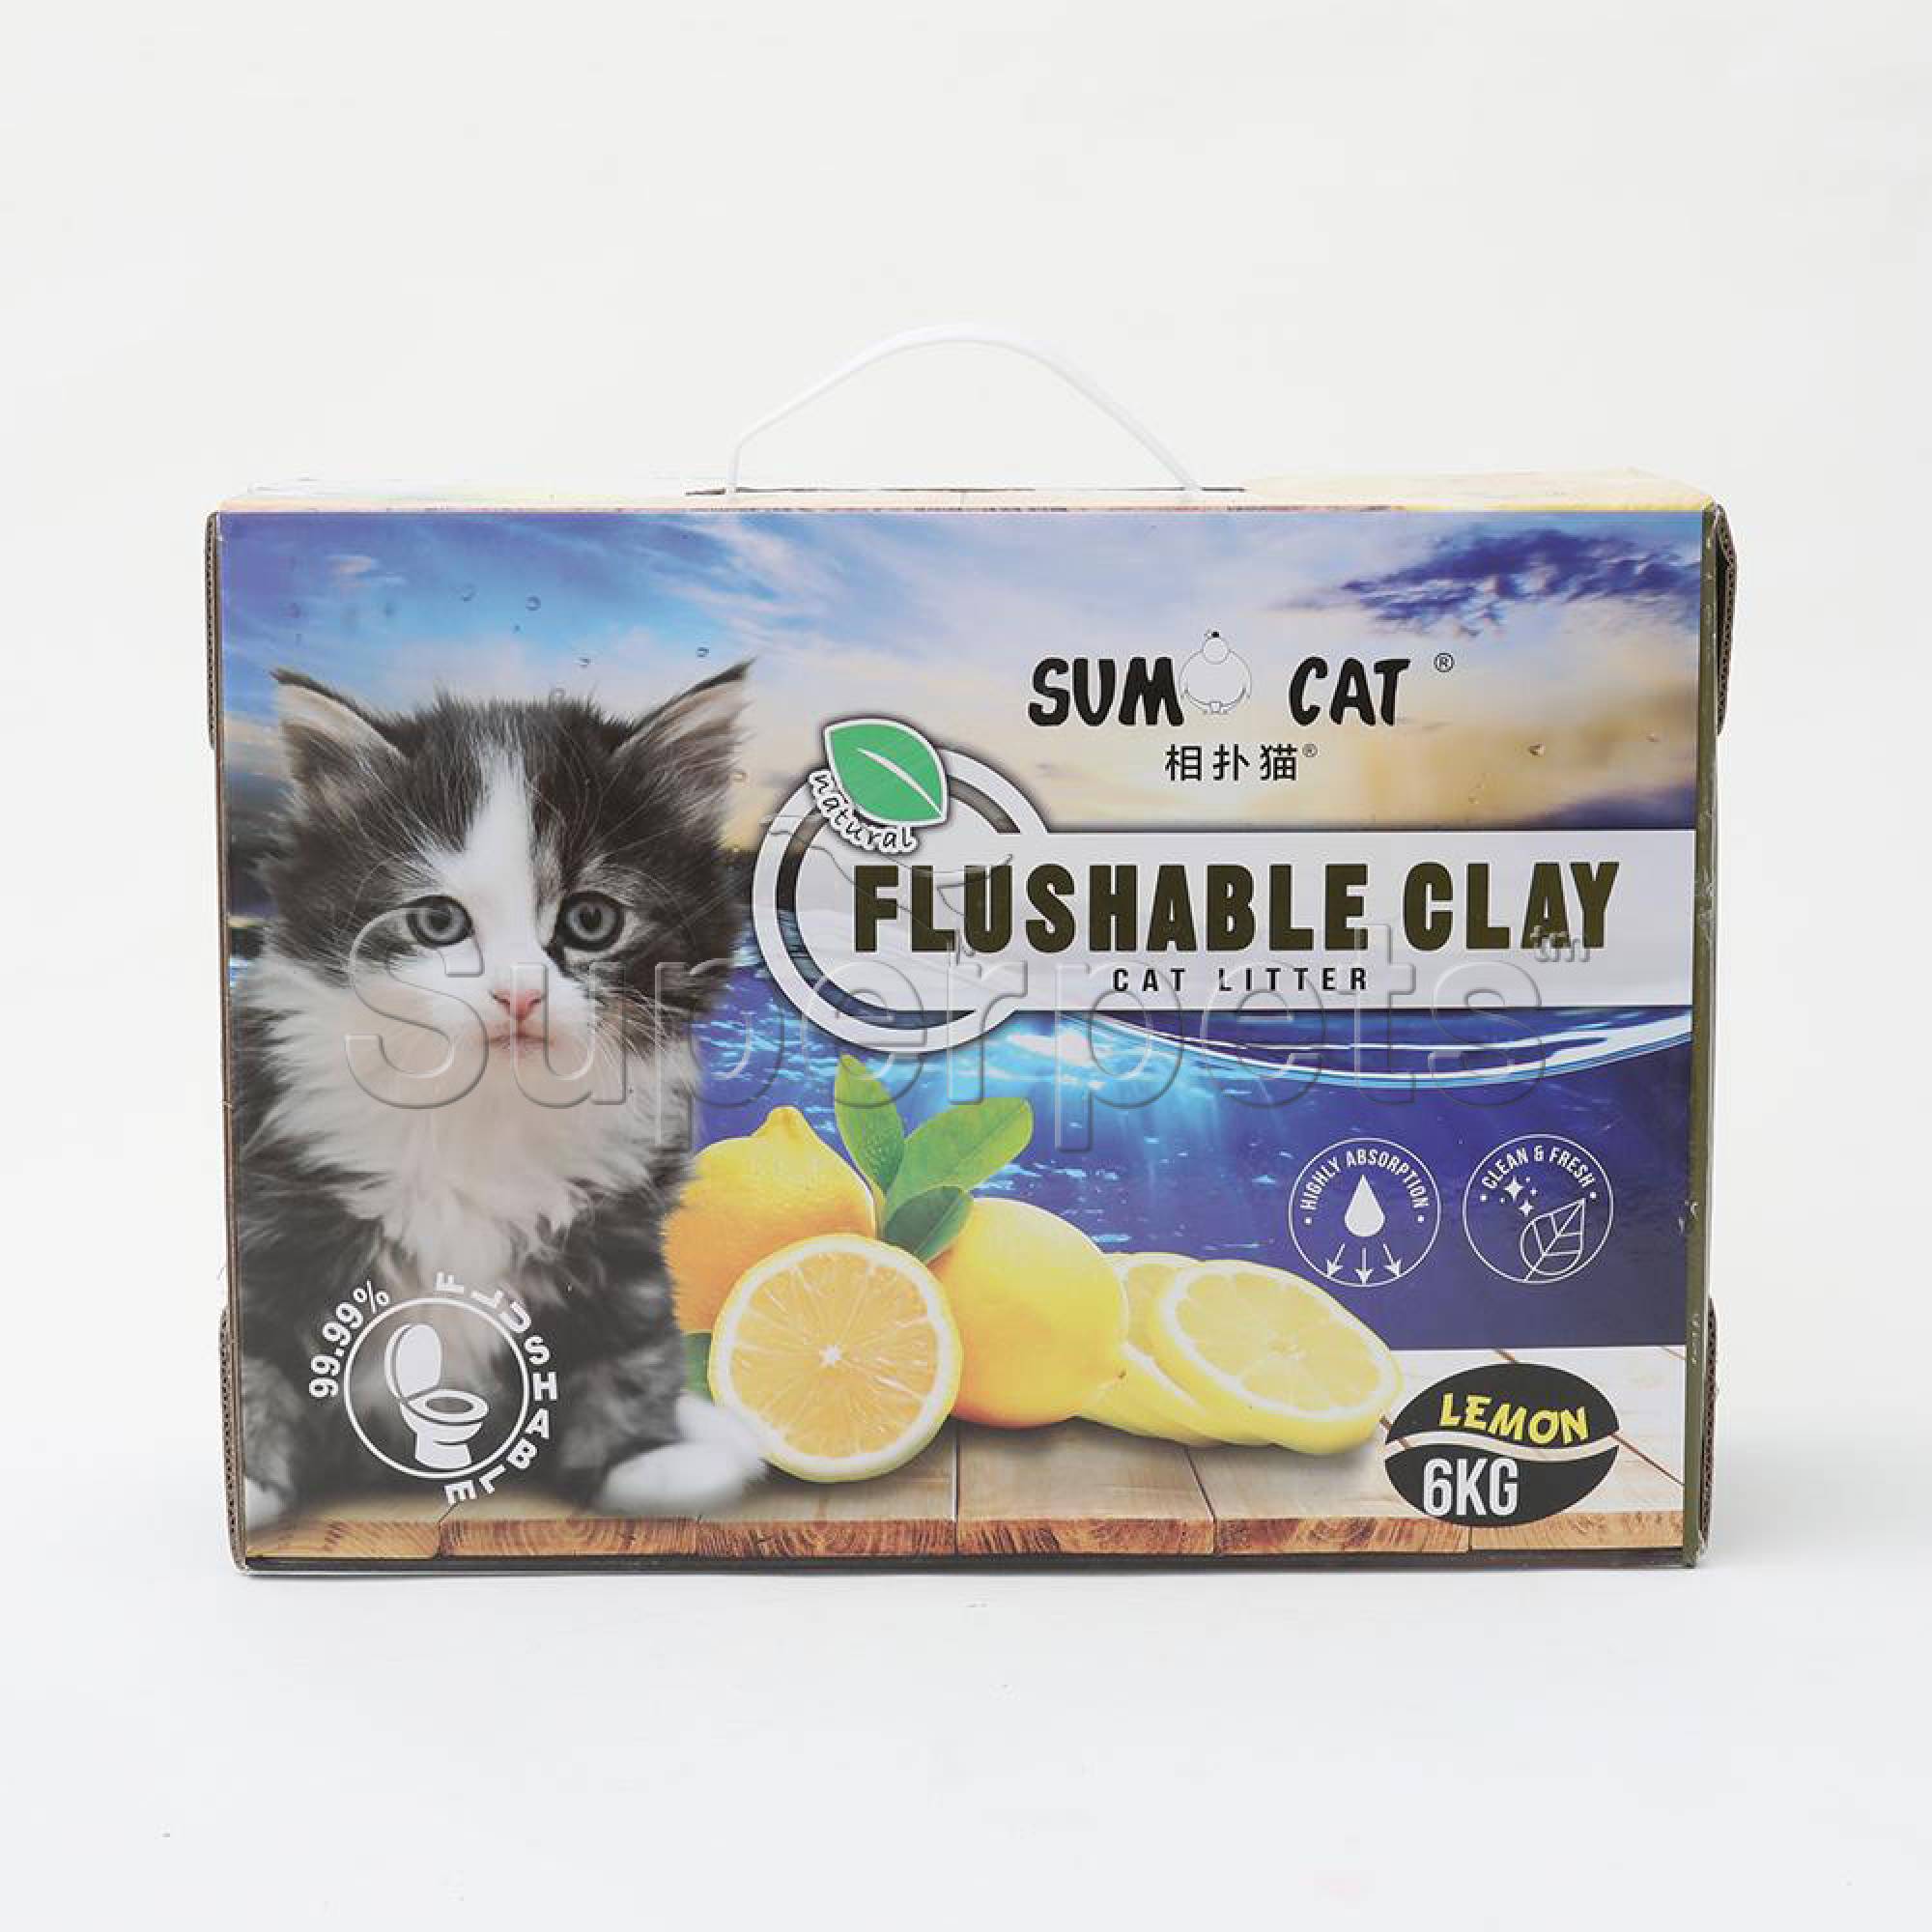 Sumo Cat - Flushable Cat litter - Lemon 6kg (RB140)